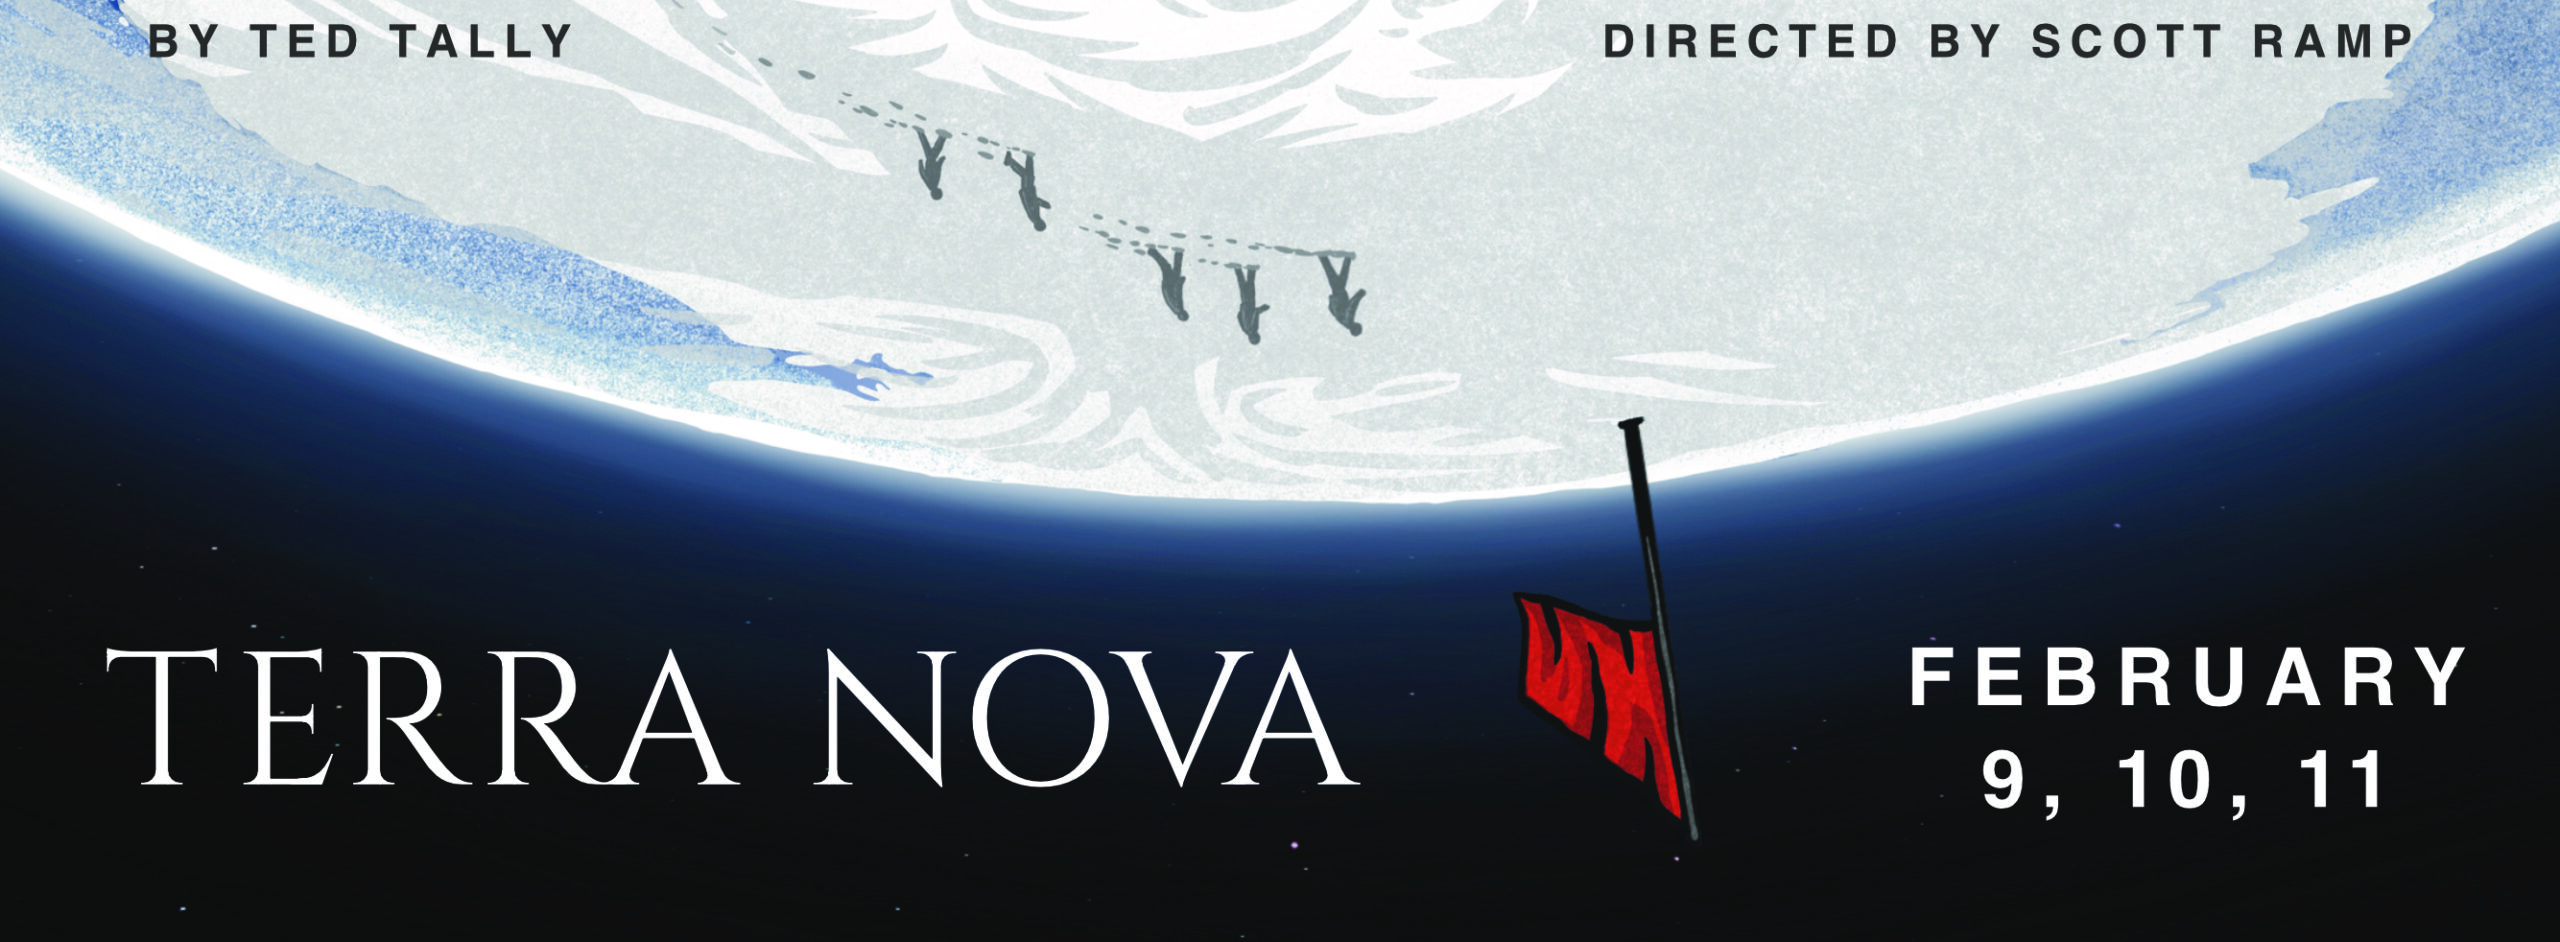 “Terra Nova” returns to Pentacle Theatre stage Feb. 9 & 11